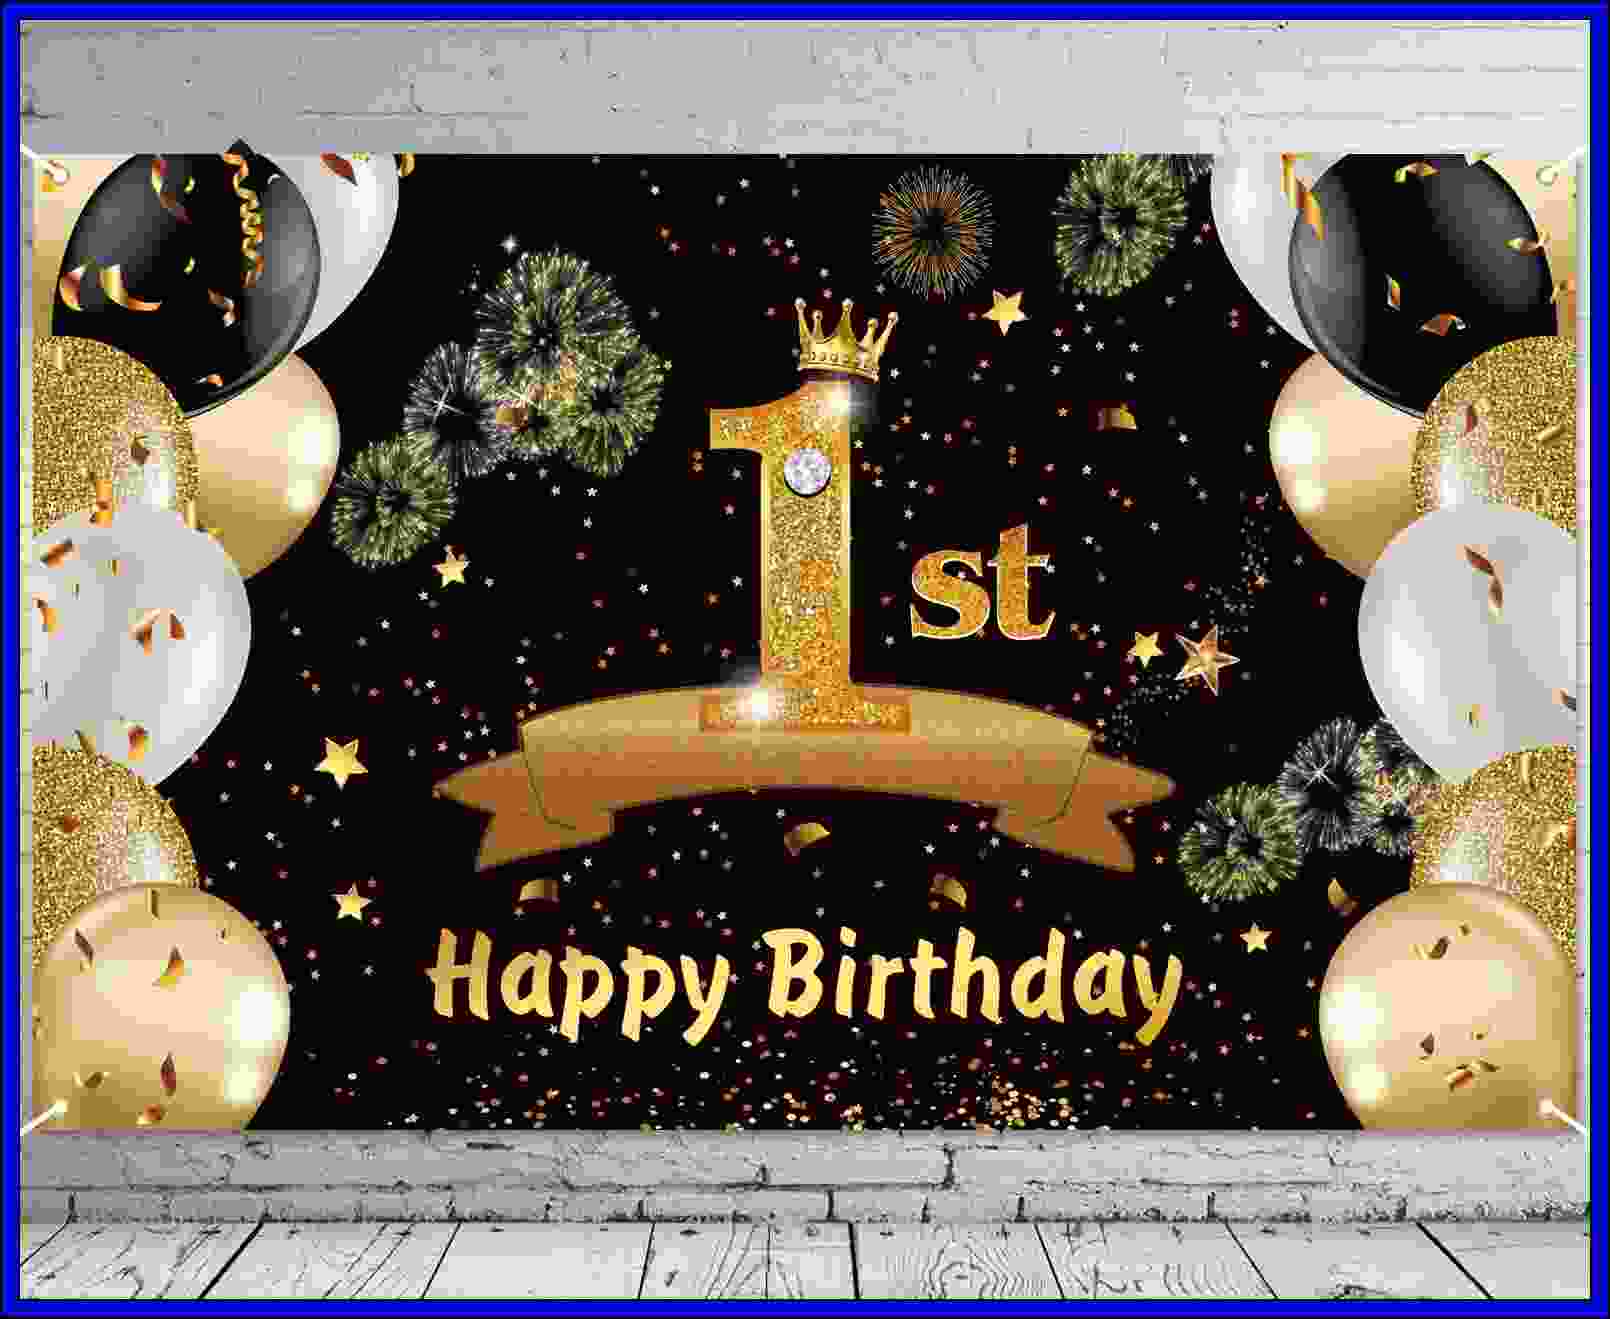 birthday wishes for 1st birthday girl
